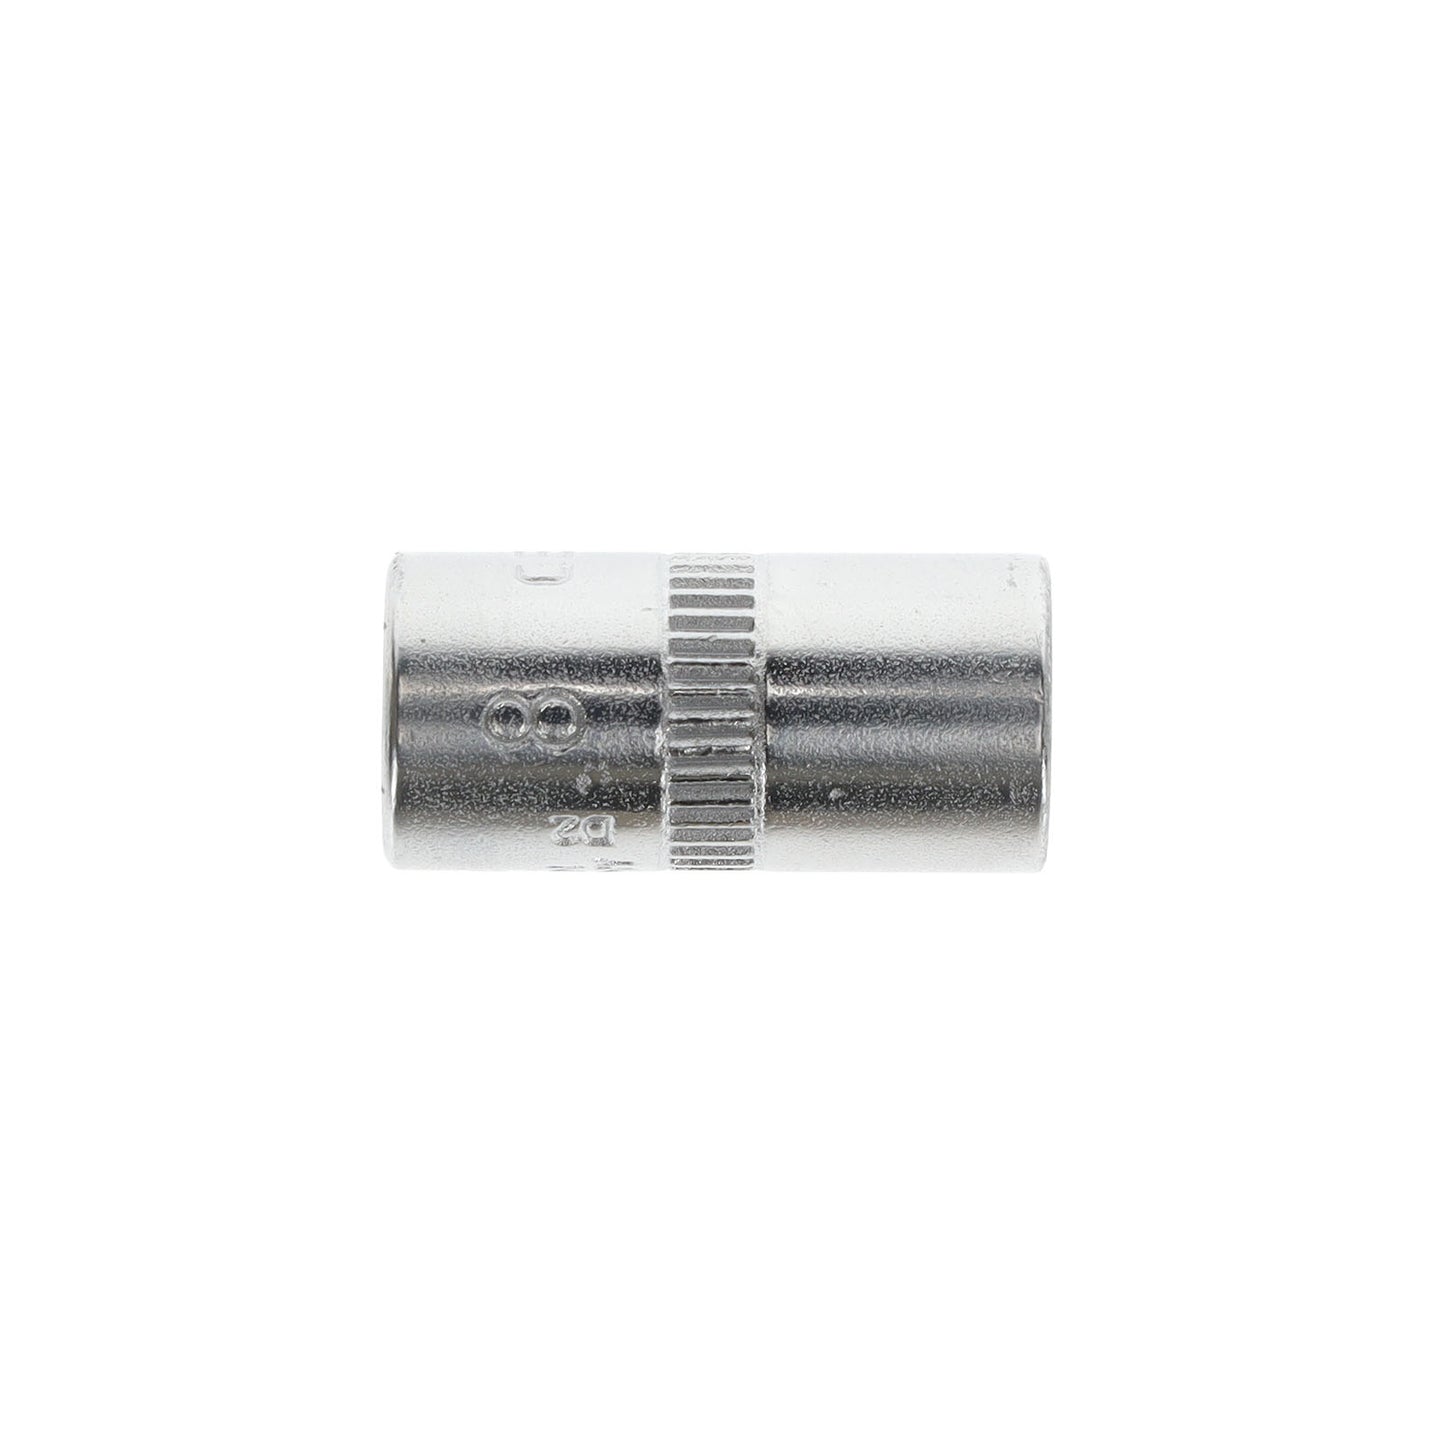 GEDORE D 20 8 - Unit Drive Socket 1/4", 8 mm (6225750)